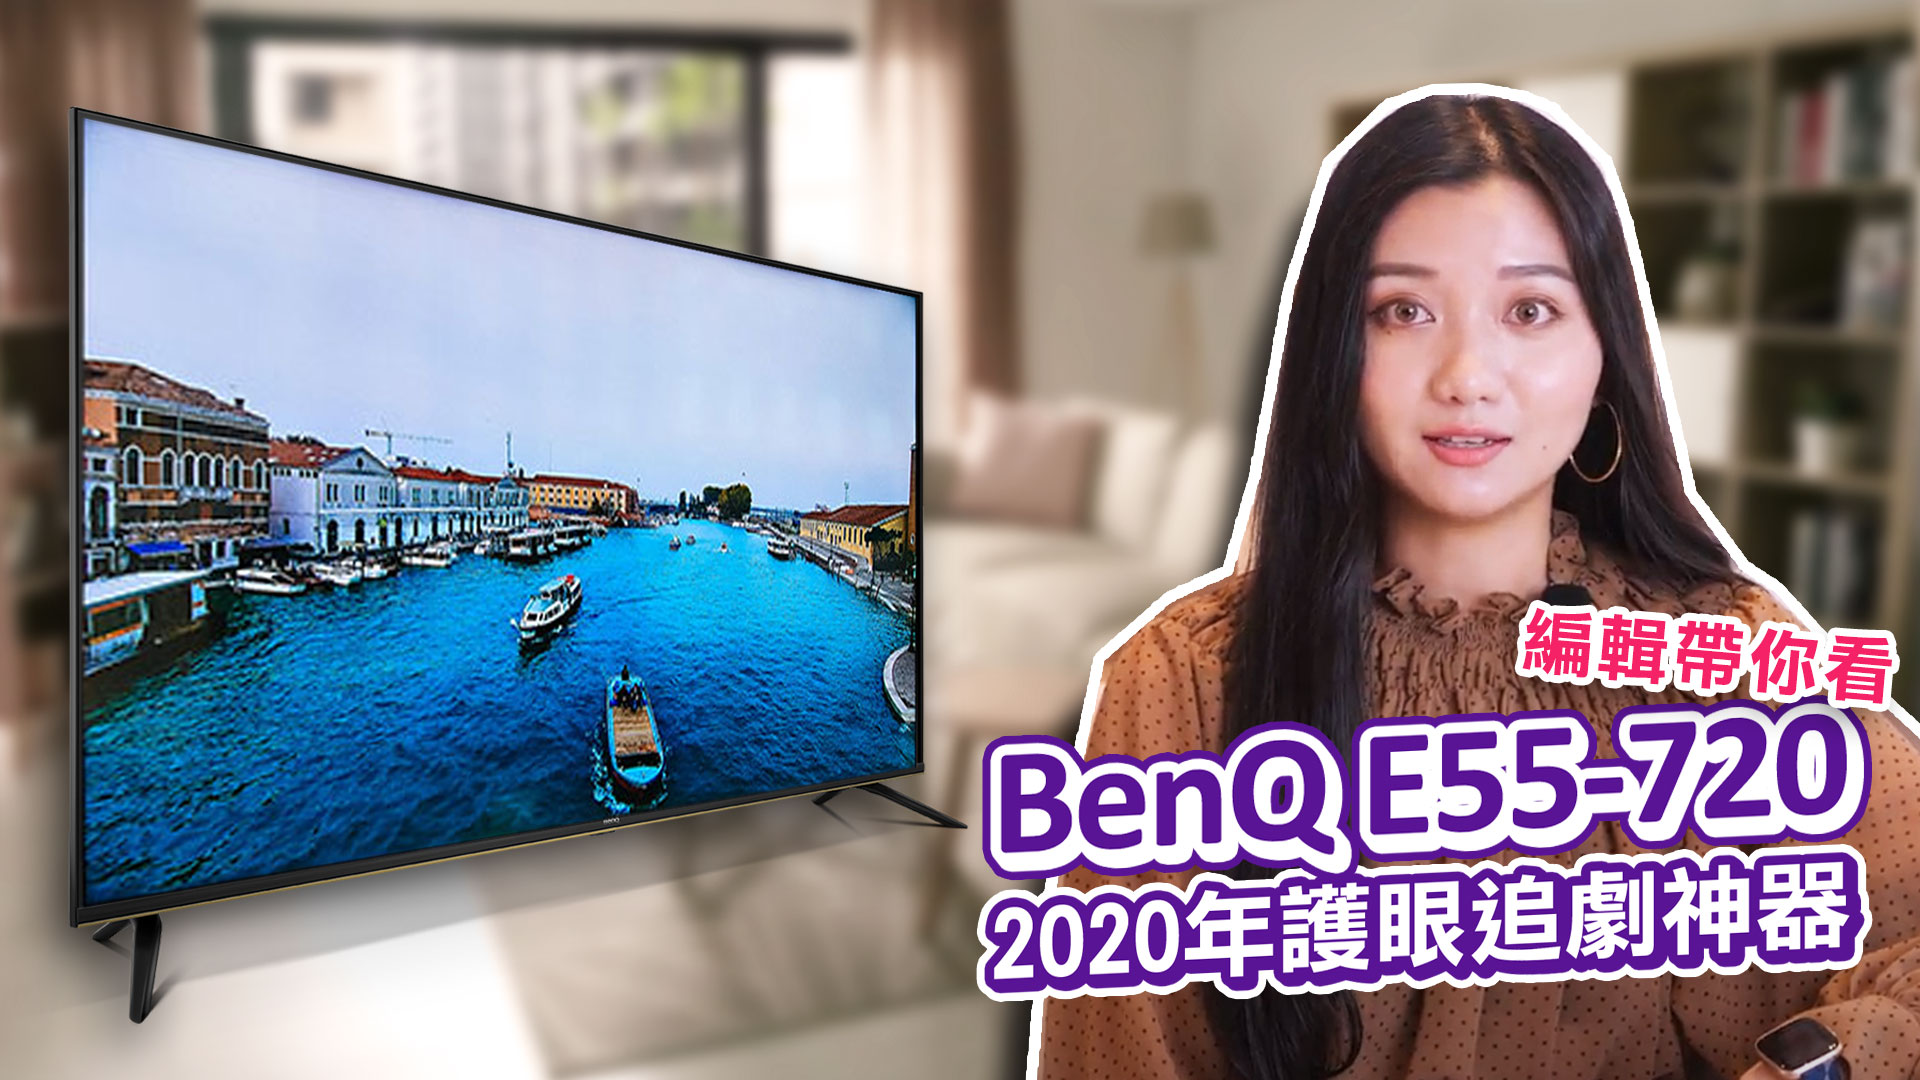 2020 年護眼追劇神器 BenQ E55-720 Android 智慧電視